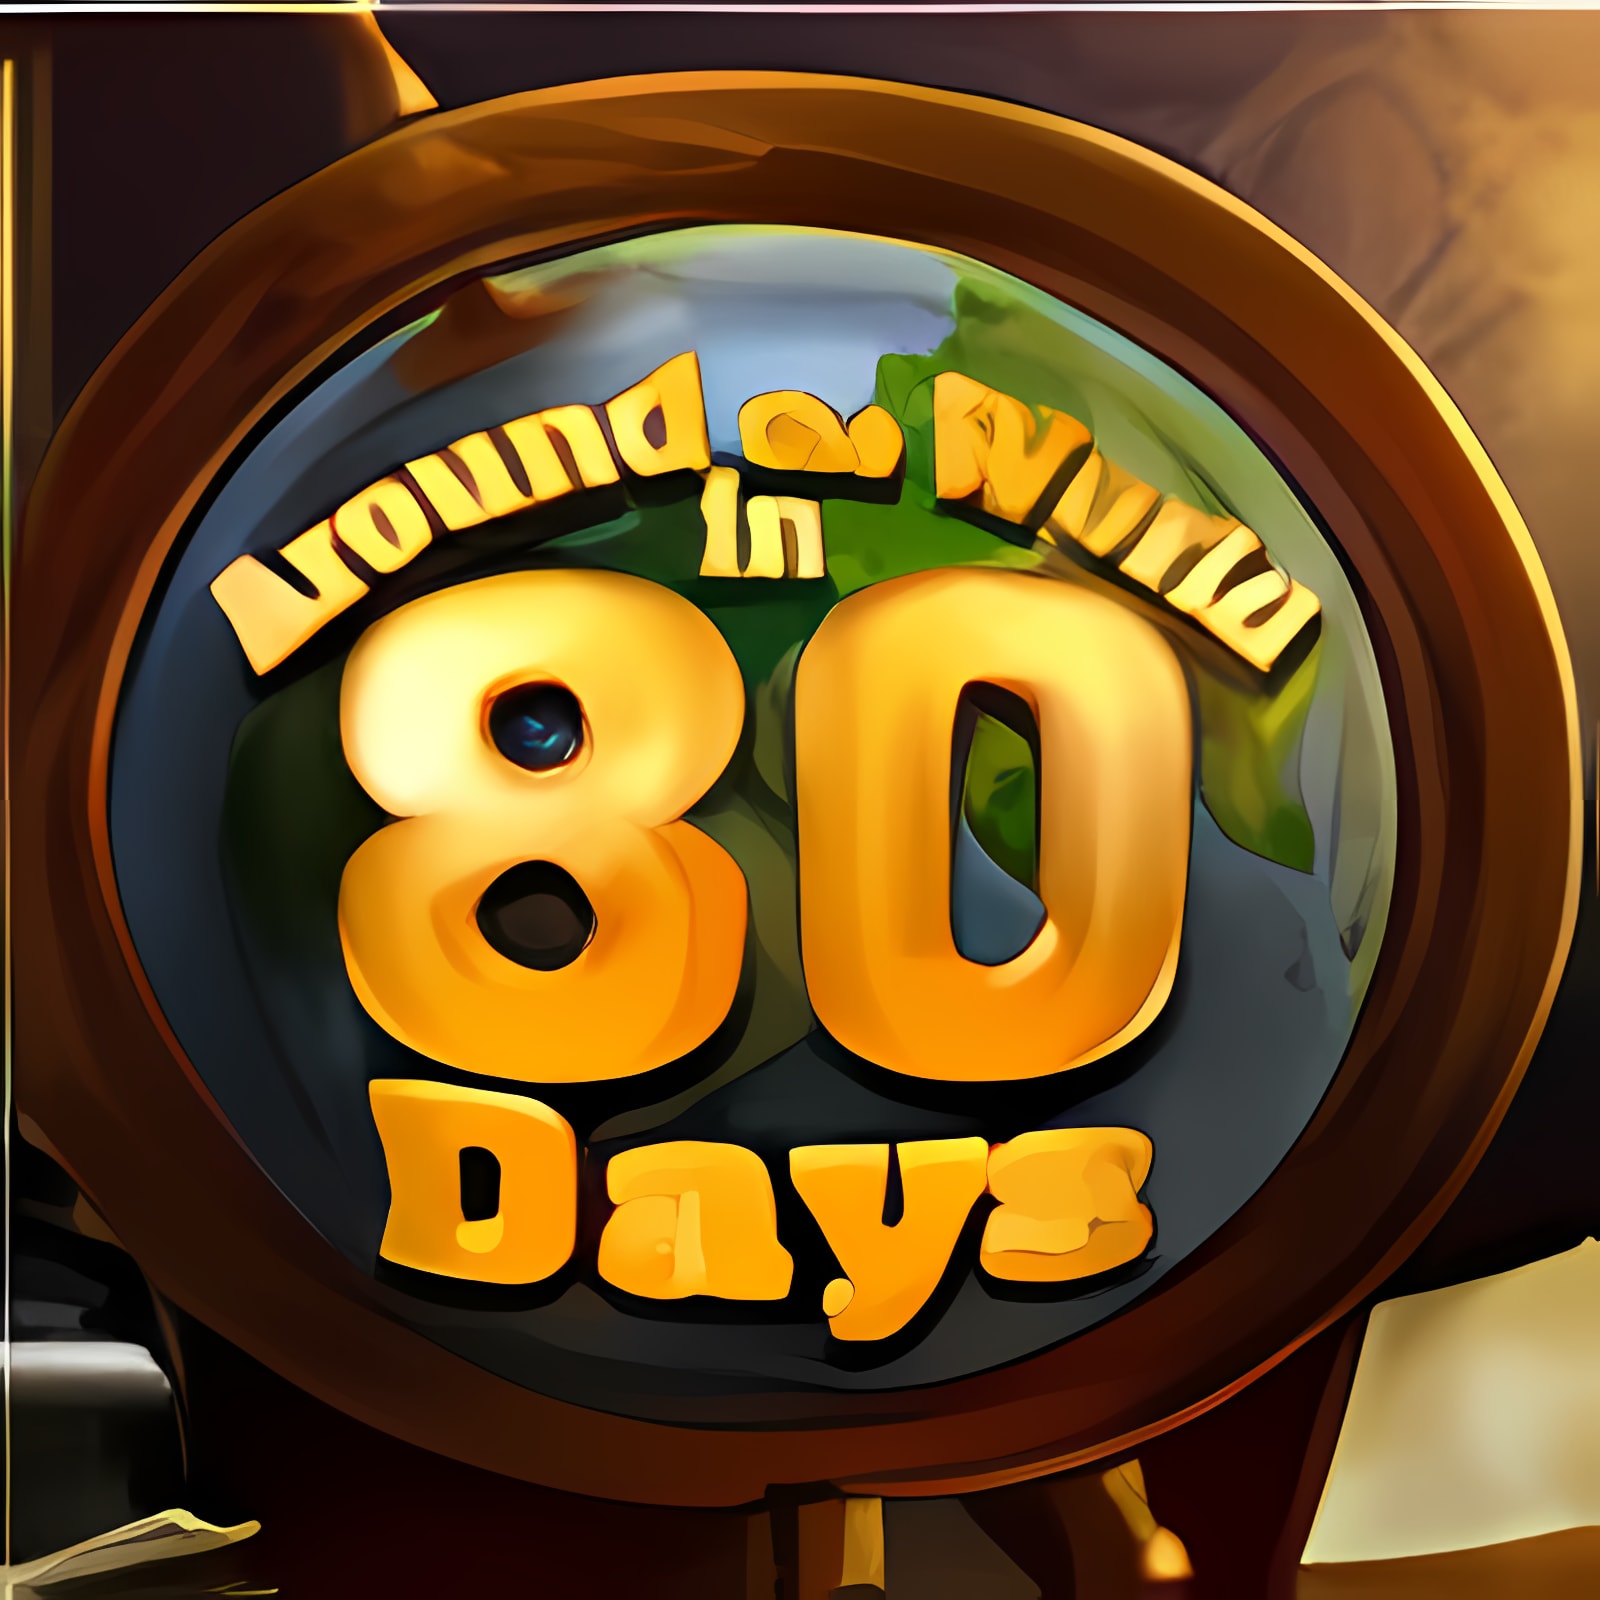 around the world in 80 days music box company